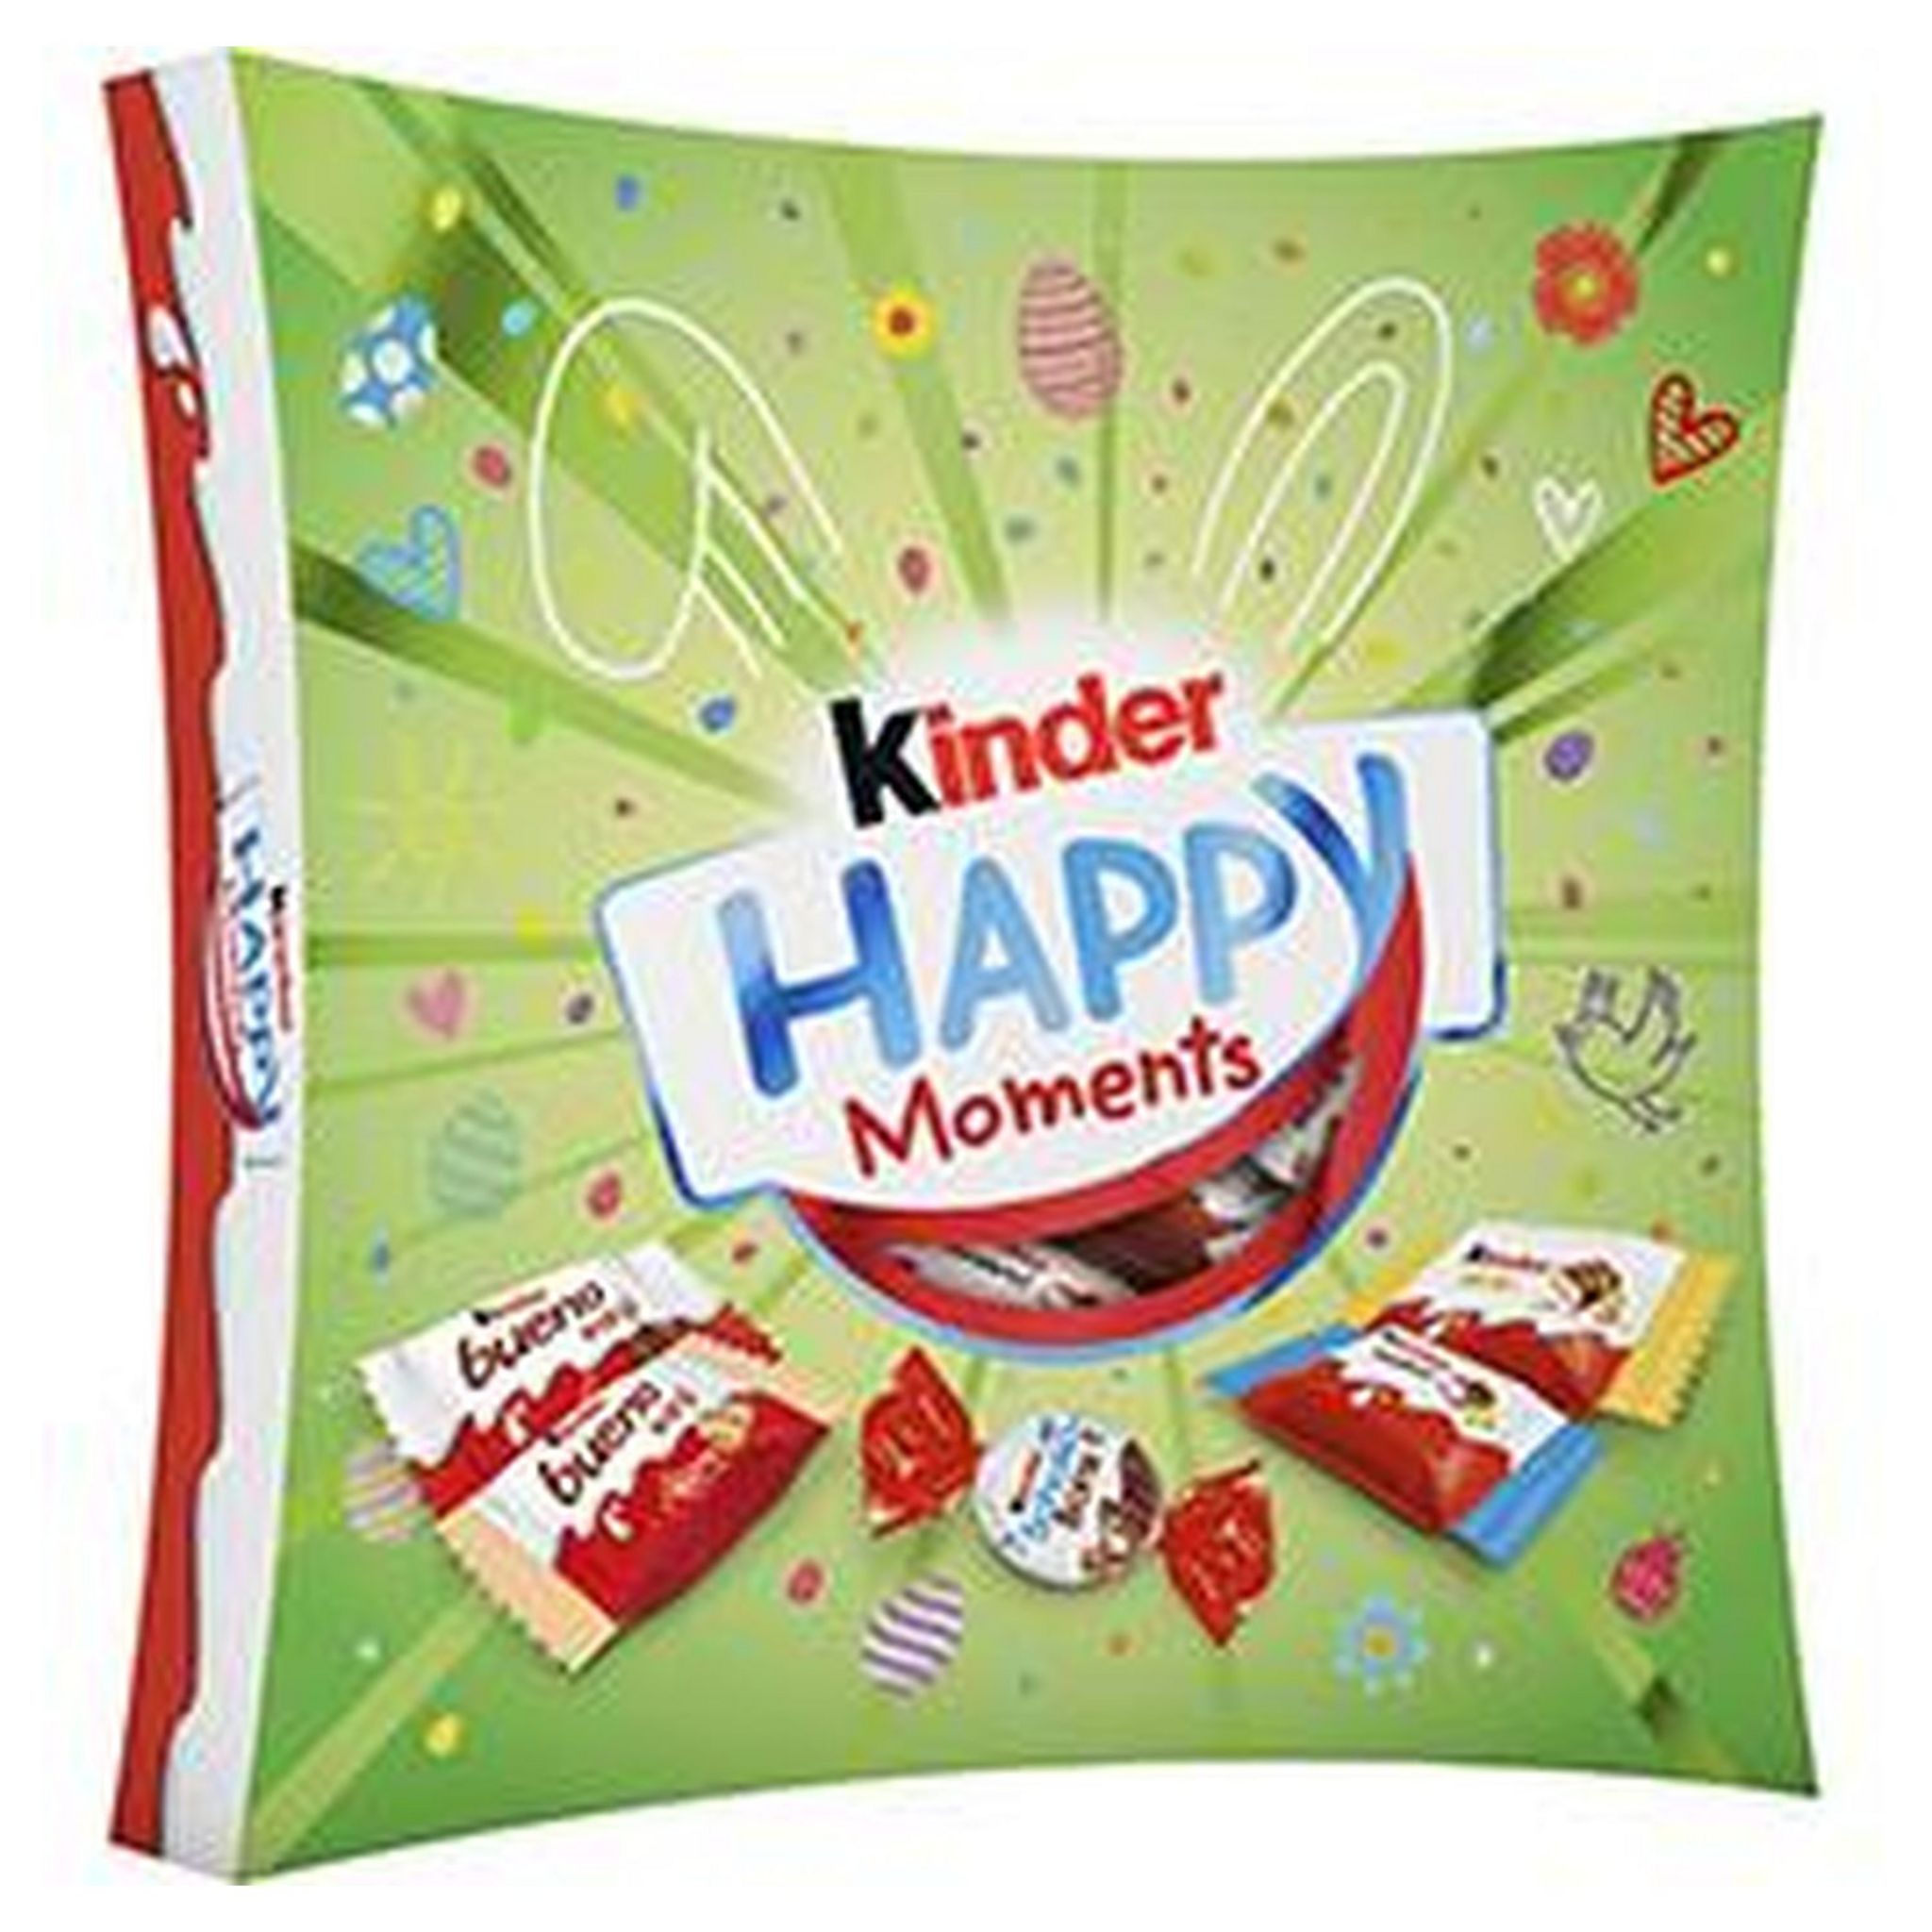 KINDER Happy Moments mini assortiment de chocolats 242g pas cher